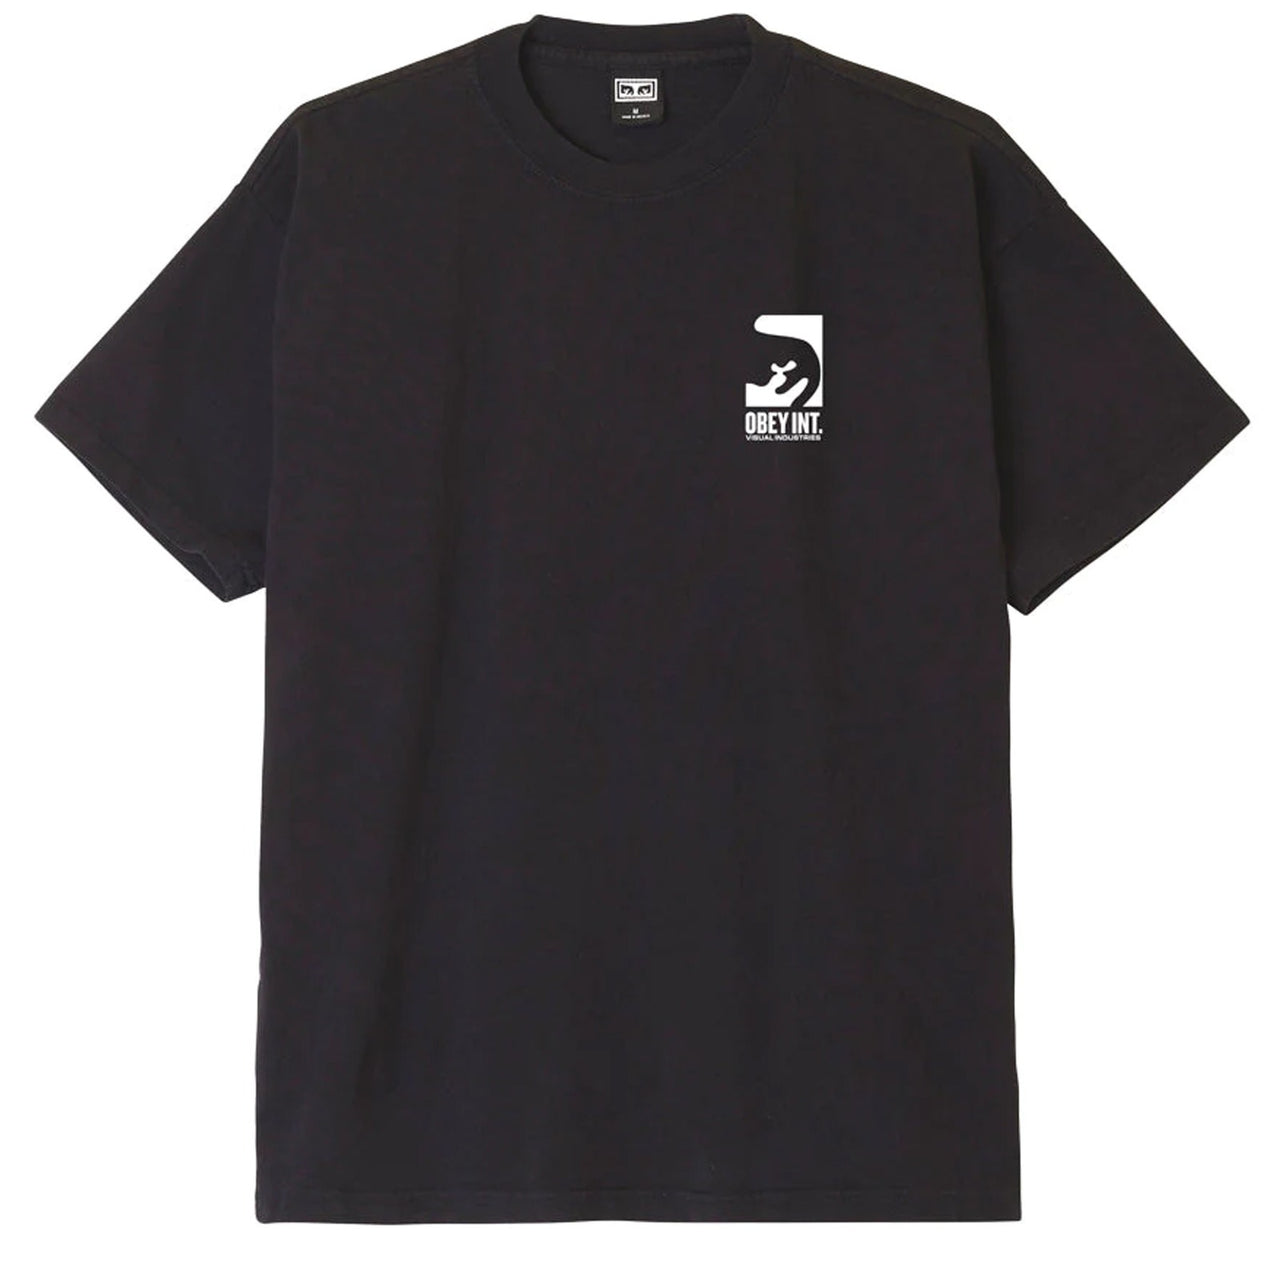 Int. Visual Industries Heavyweight T-Shirt - Off Black